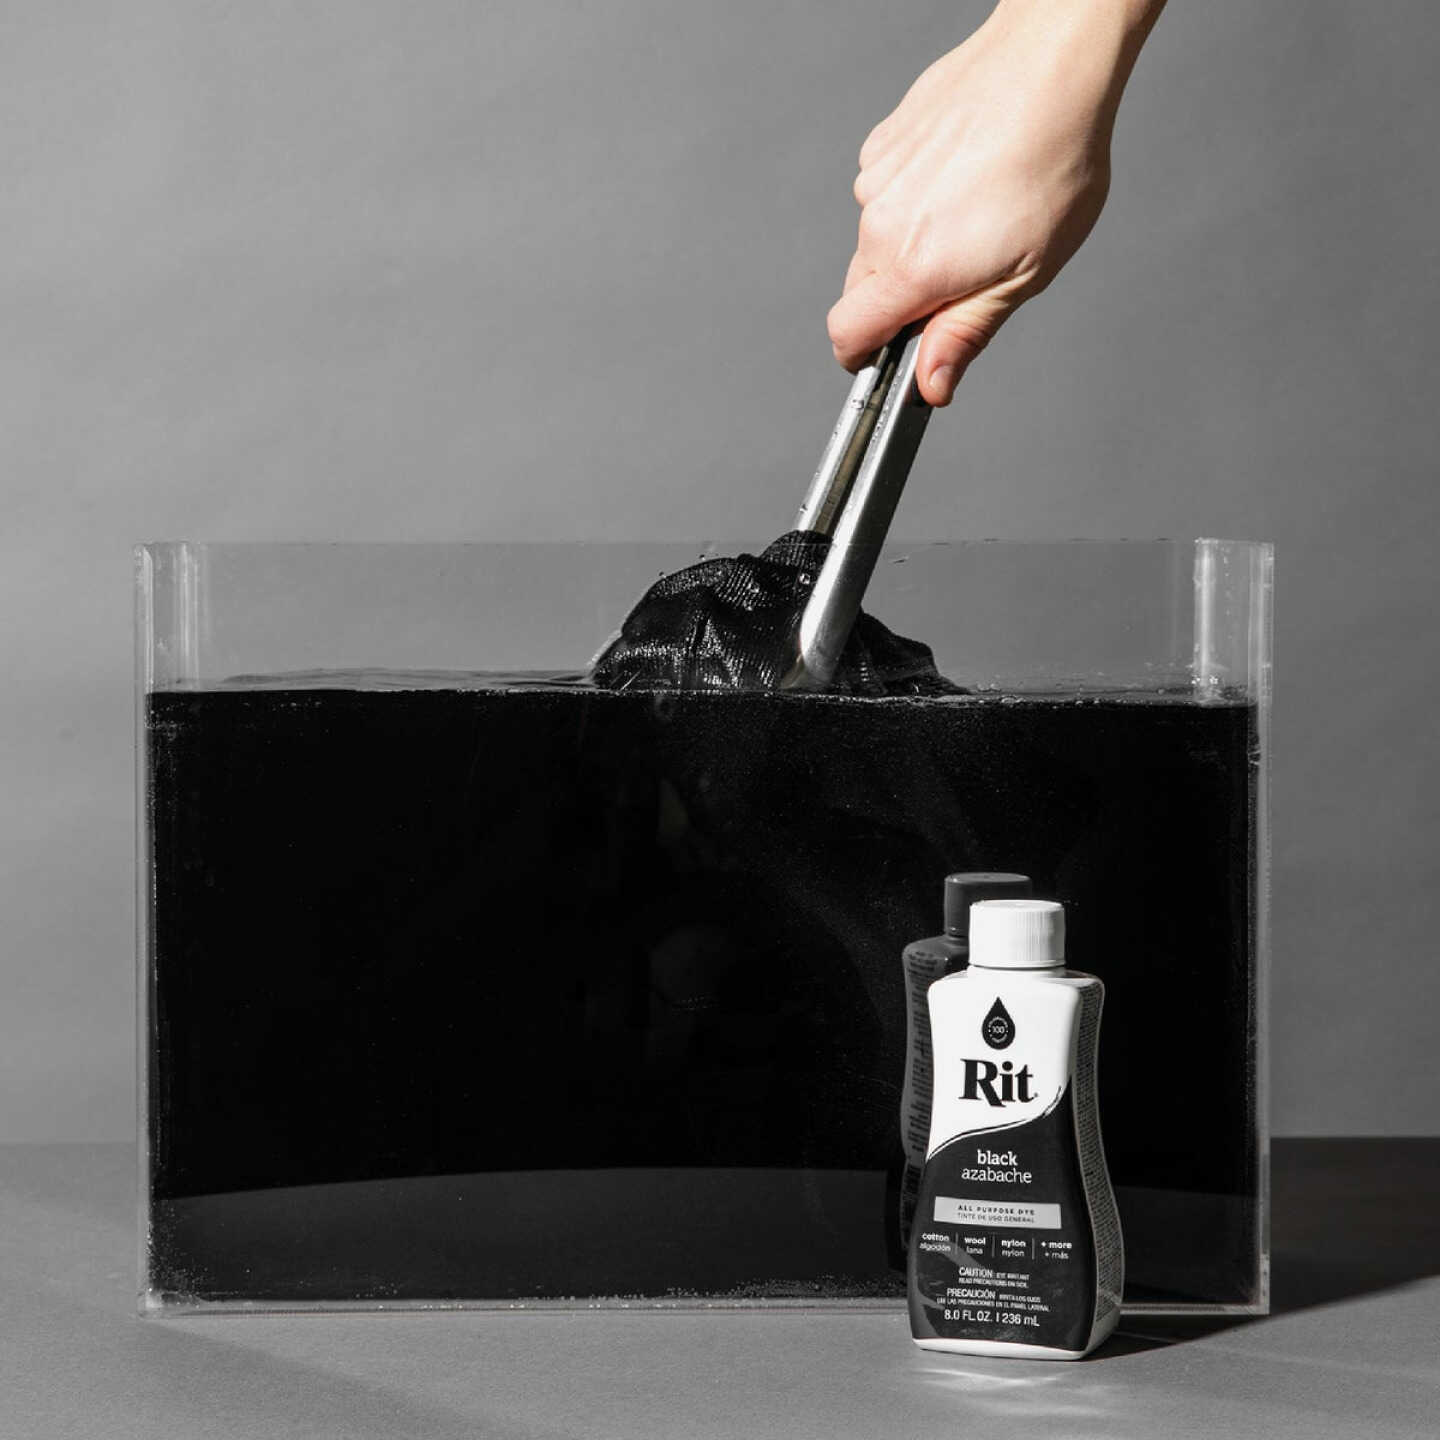 Rit Black 8 oz Liquid Dye - Groom & Sons' Hardware